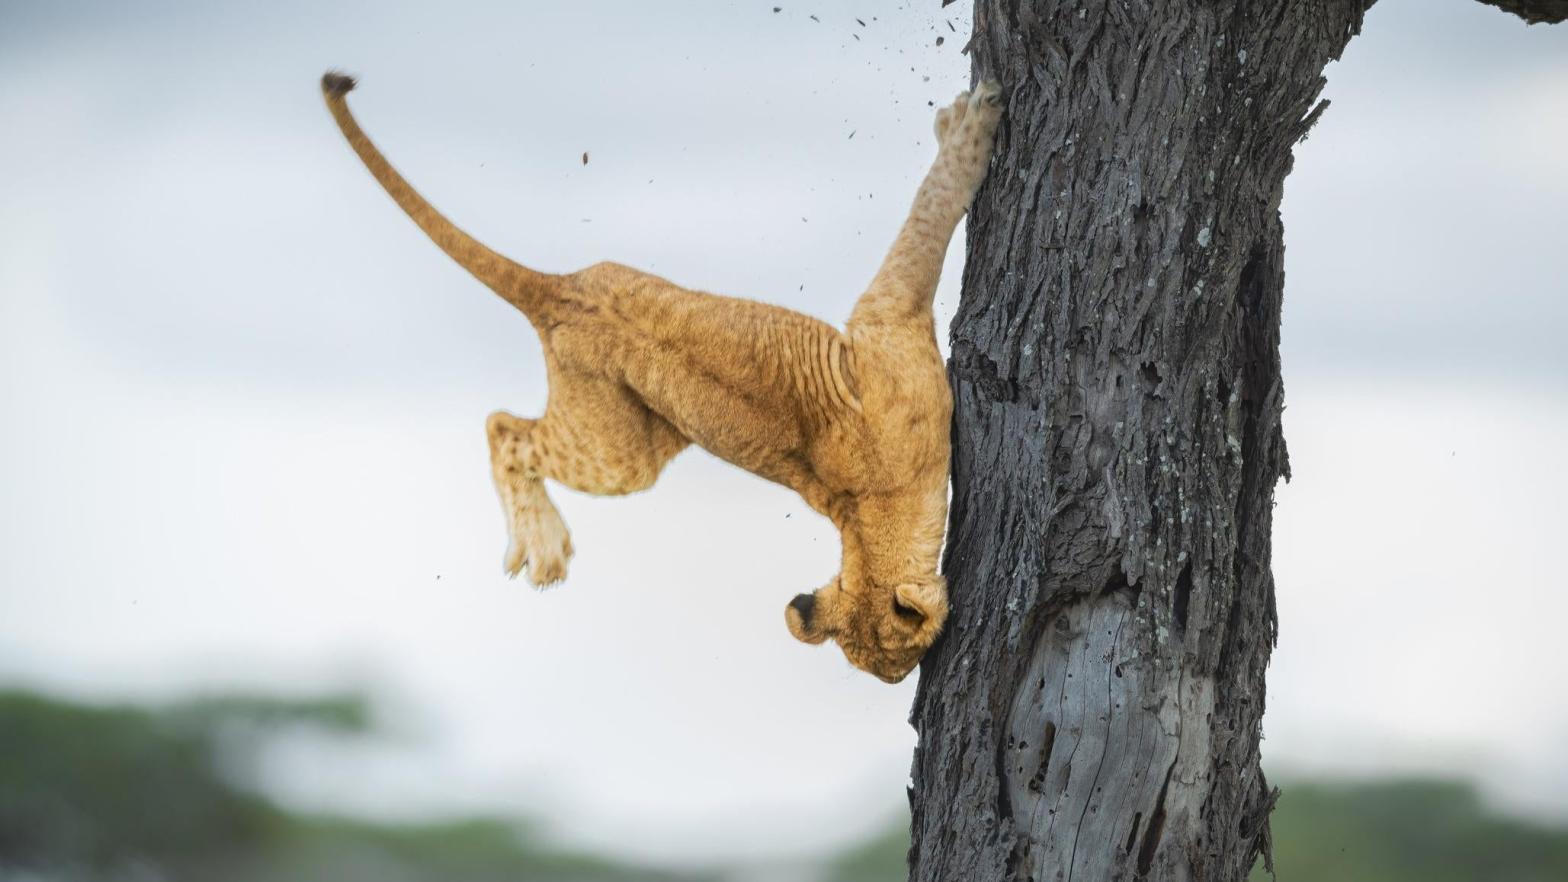 A jump goes wrong for a lion cub. (Photo: © Jennifer Hadley / Comedywildlifephoto.com)